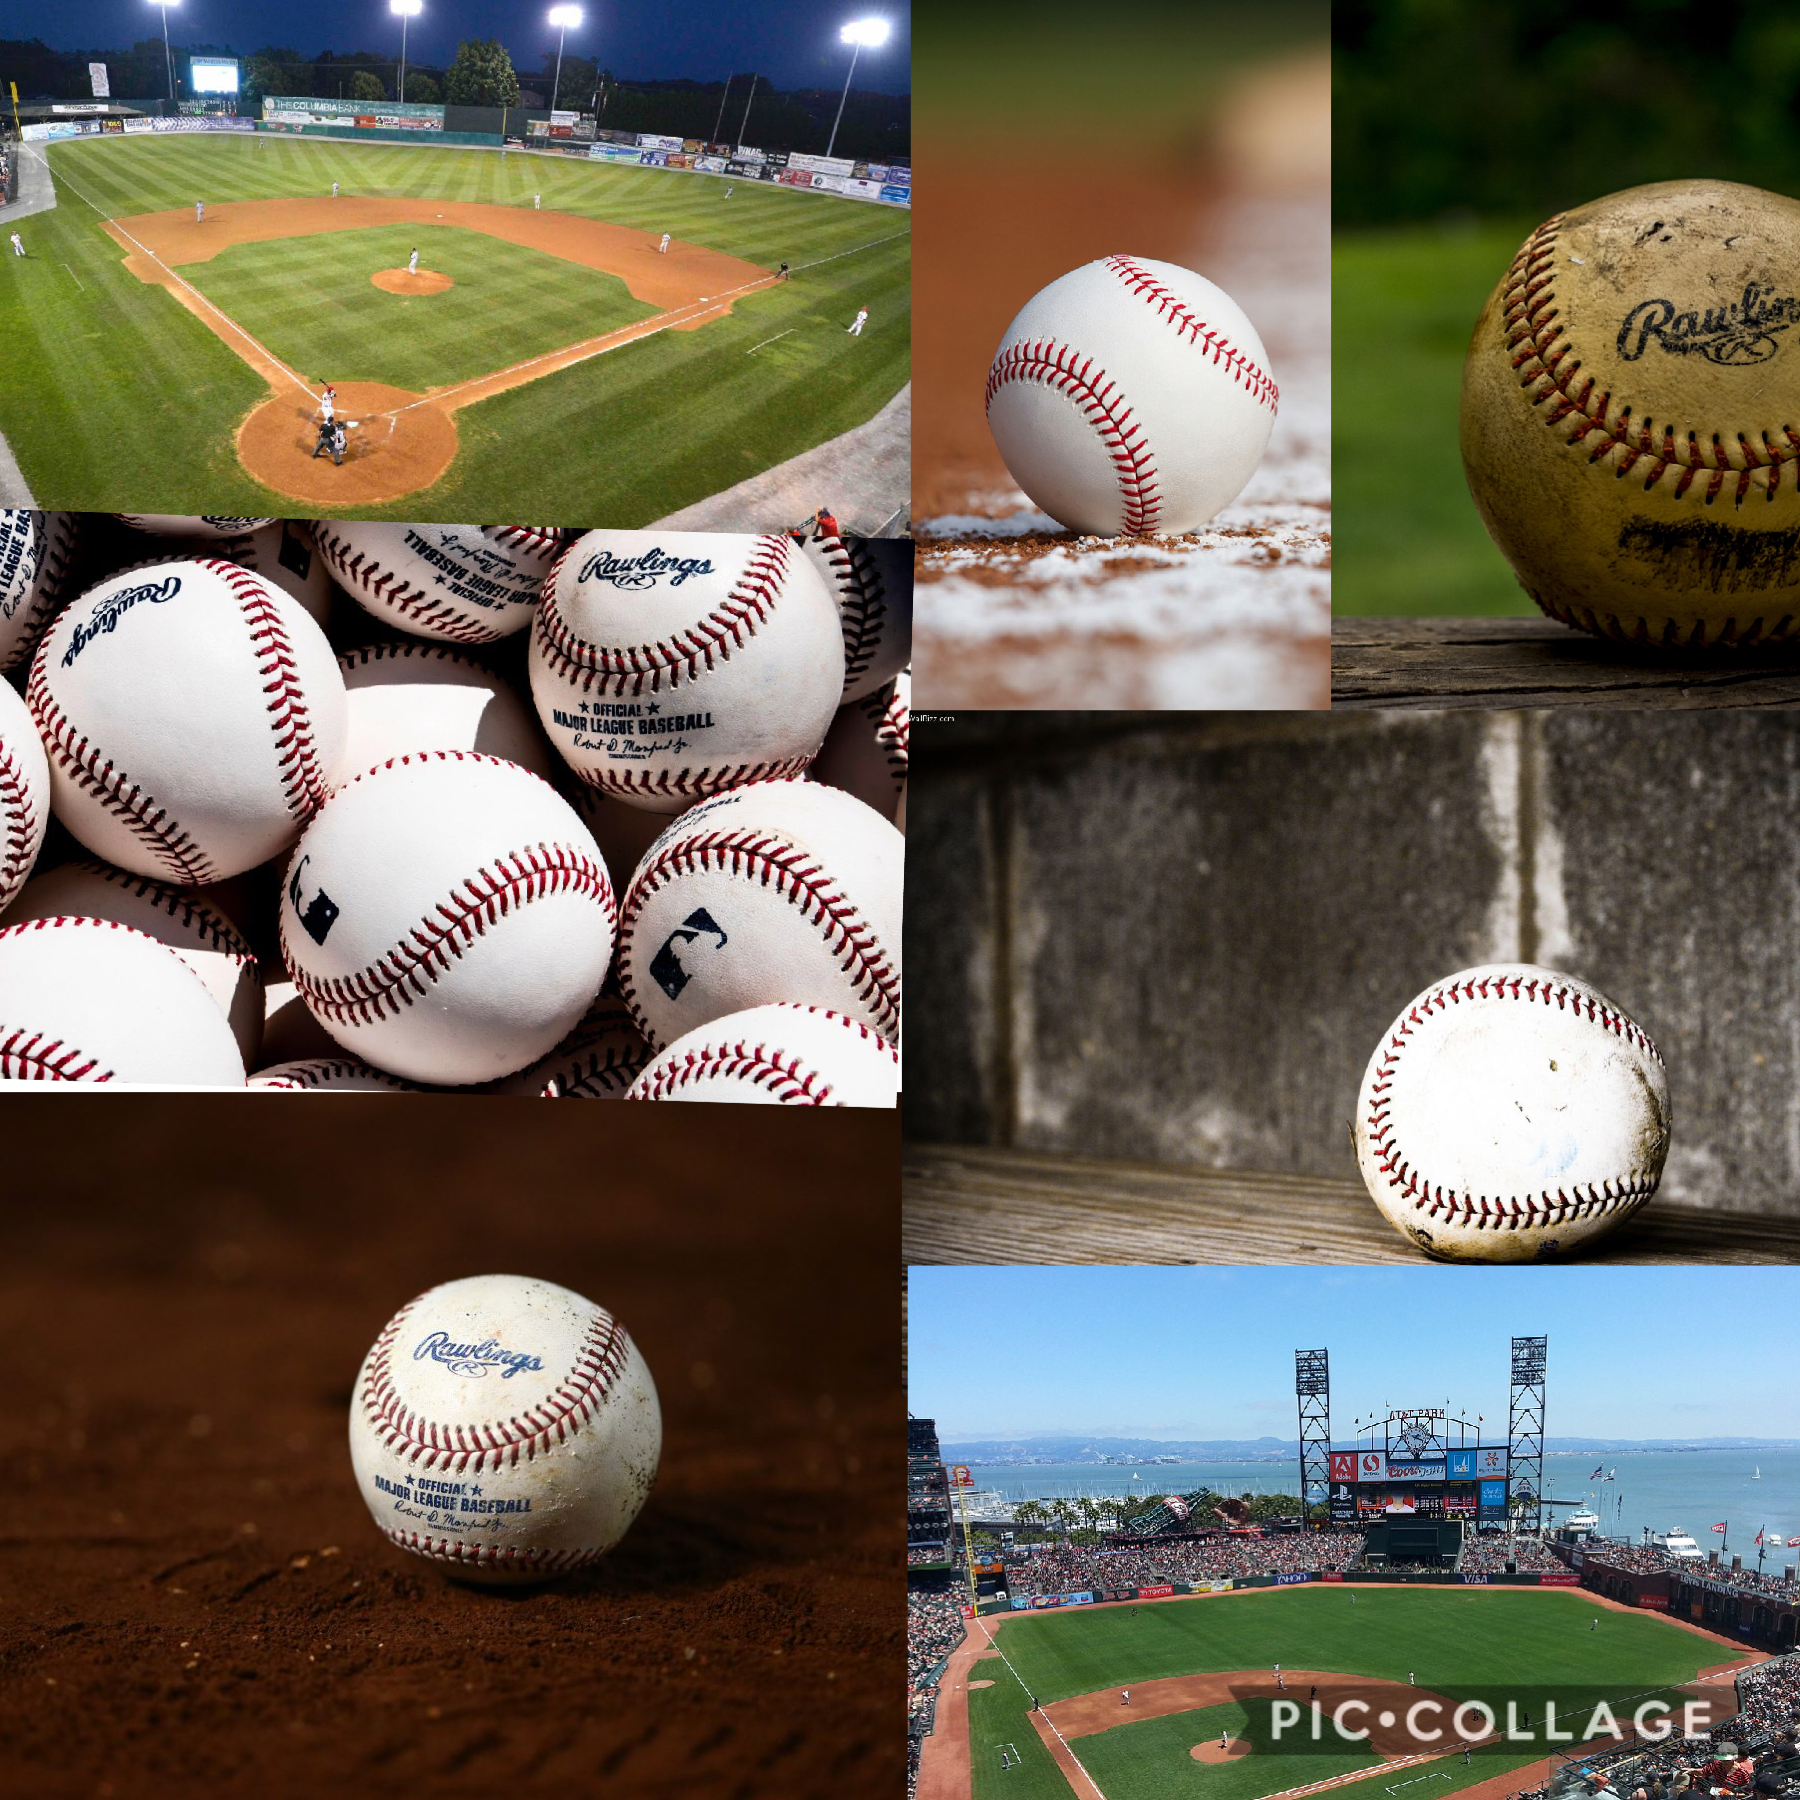 Baseball